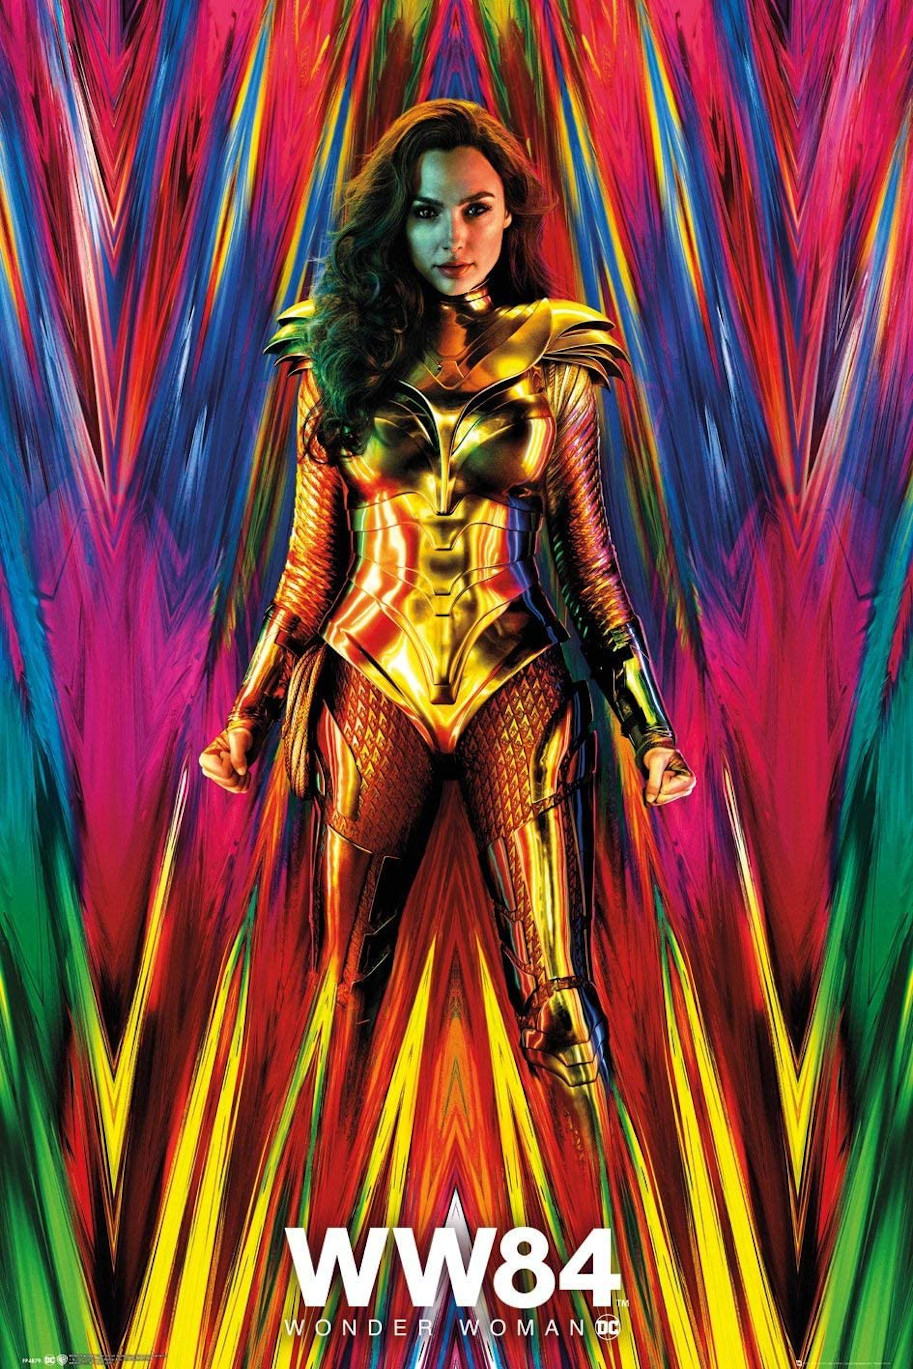 Wonder Woman 1984, Gal Gadot, Patty Jenkins, Chris Pine, Kristen Wiig, Pedro Pascale, superhero, DC, sequel, JoBlo.com